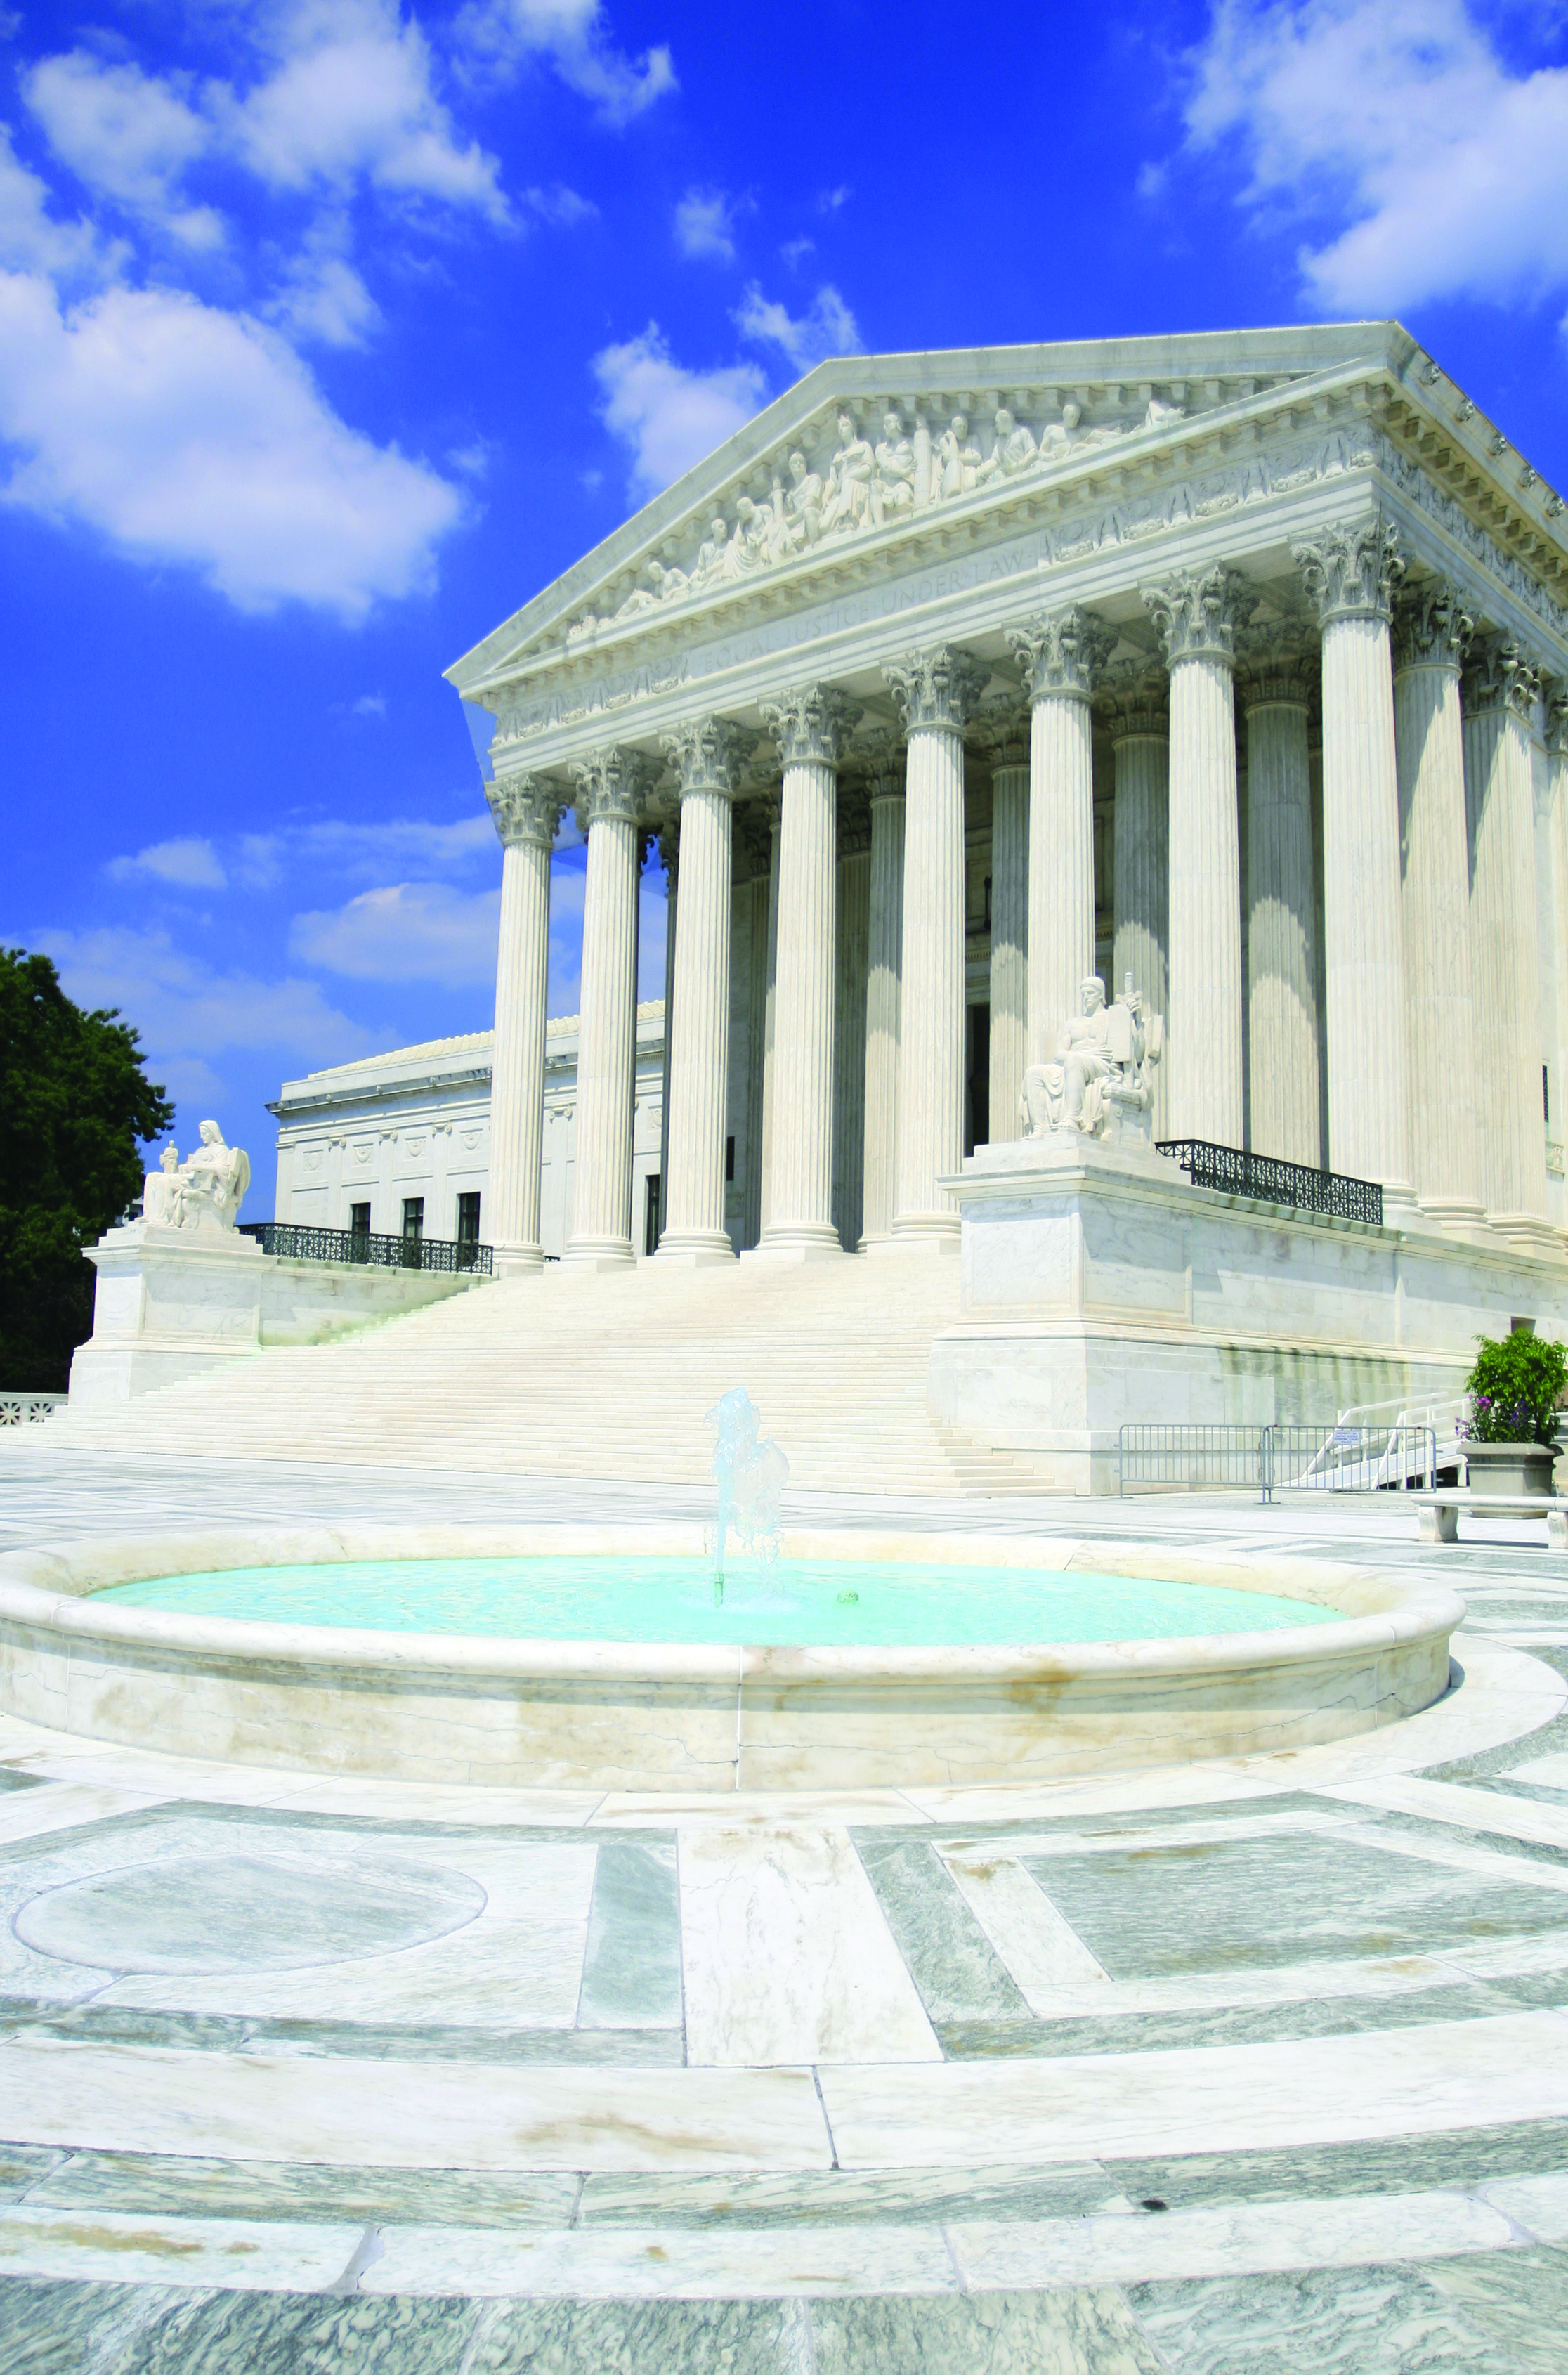 The U.S. Supreme Court building in Washington,
        D.C. (Credit: chasingmoments – stock.adobe.com)